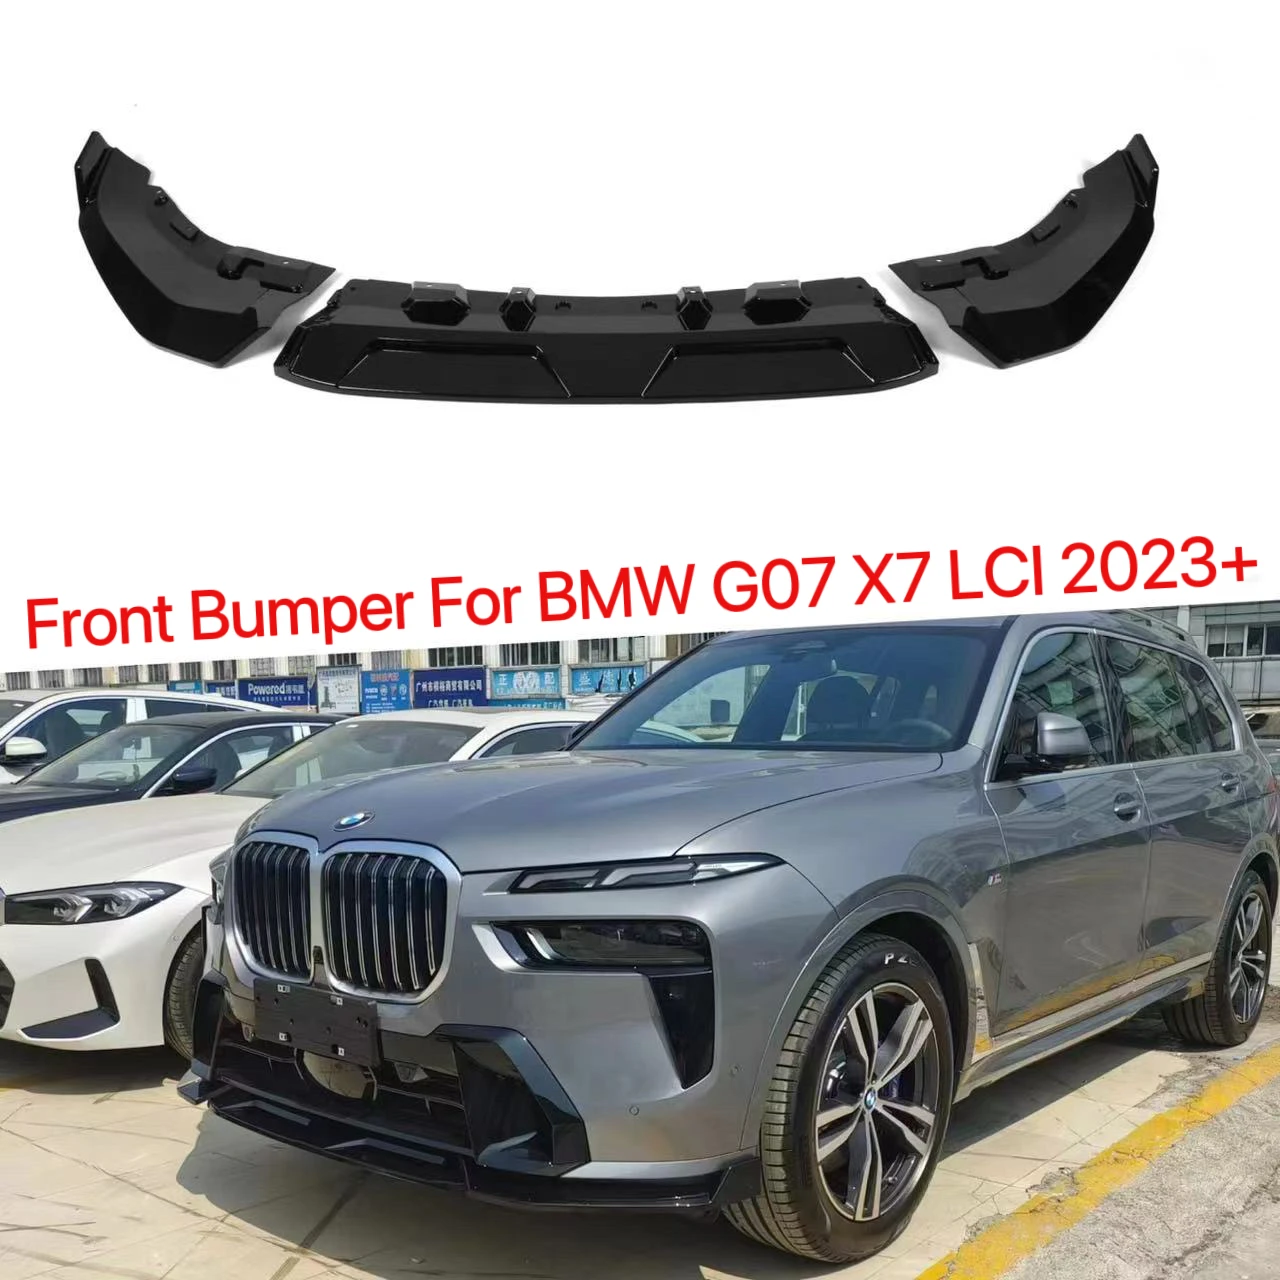 

For BMW G07 X7 LCI 2023+ Car Front Bumper Splitter Lip Spoiler Diffuser Guard Cover Body Kits Carbon Fiber Look